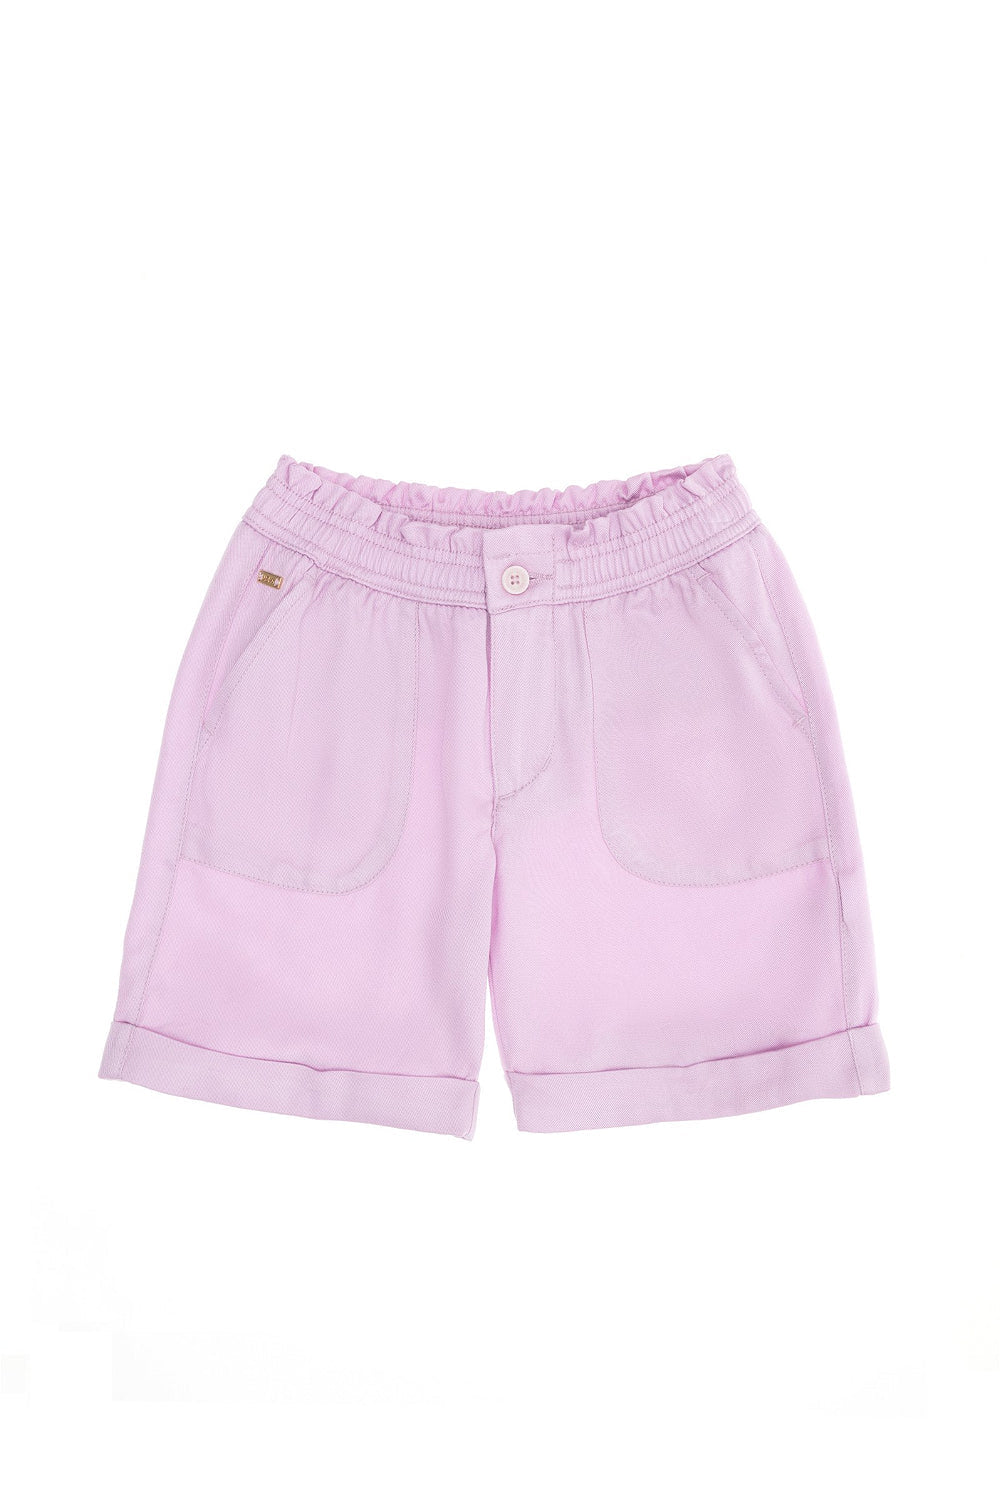 Lilac Purple Shorts